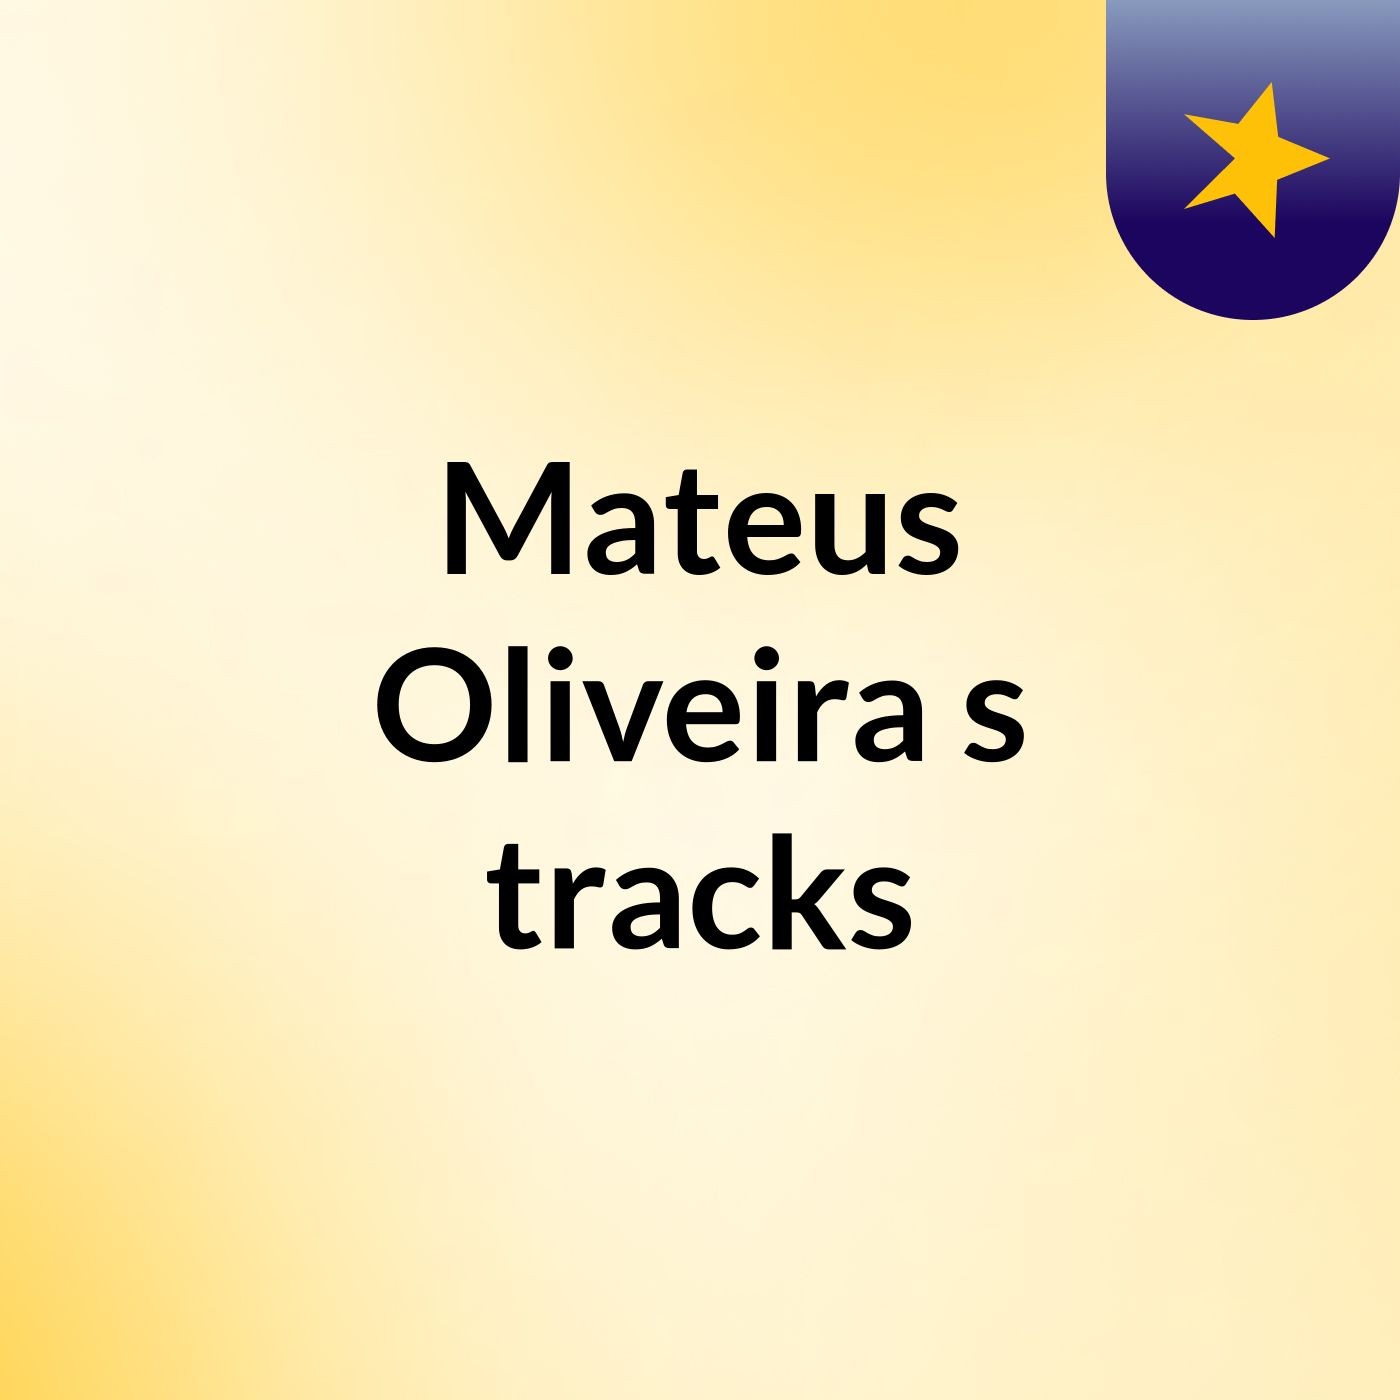 Mateus Oliveira's tracks